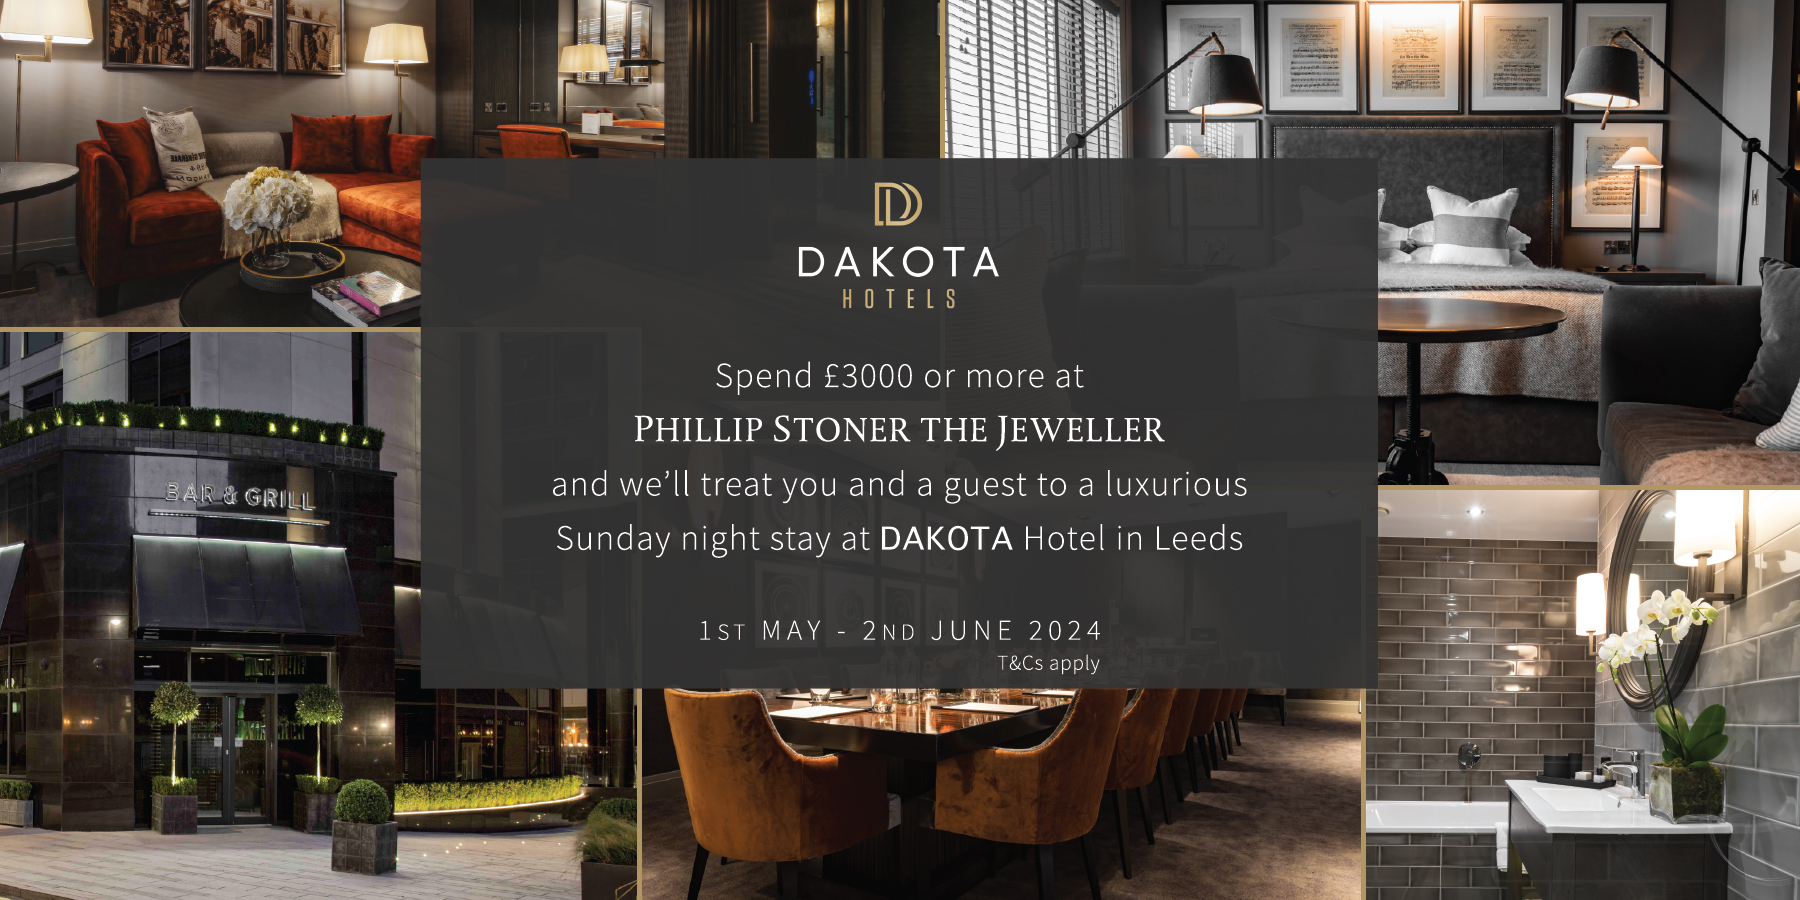 Enjoy a free night at Dakota Hotel Leeds with Phillip Stoner The Jeweller